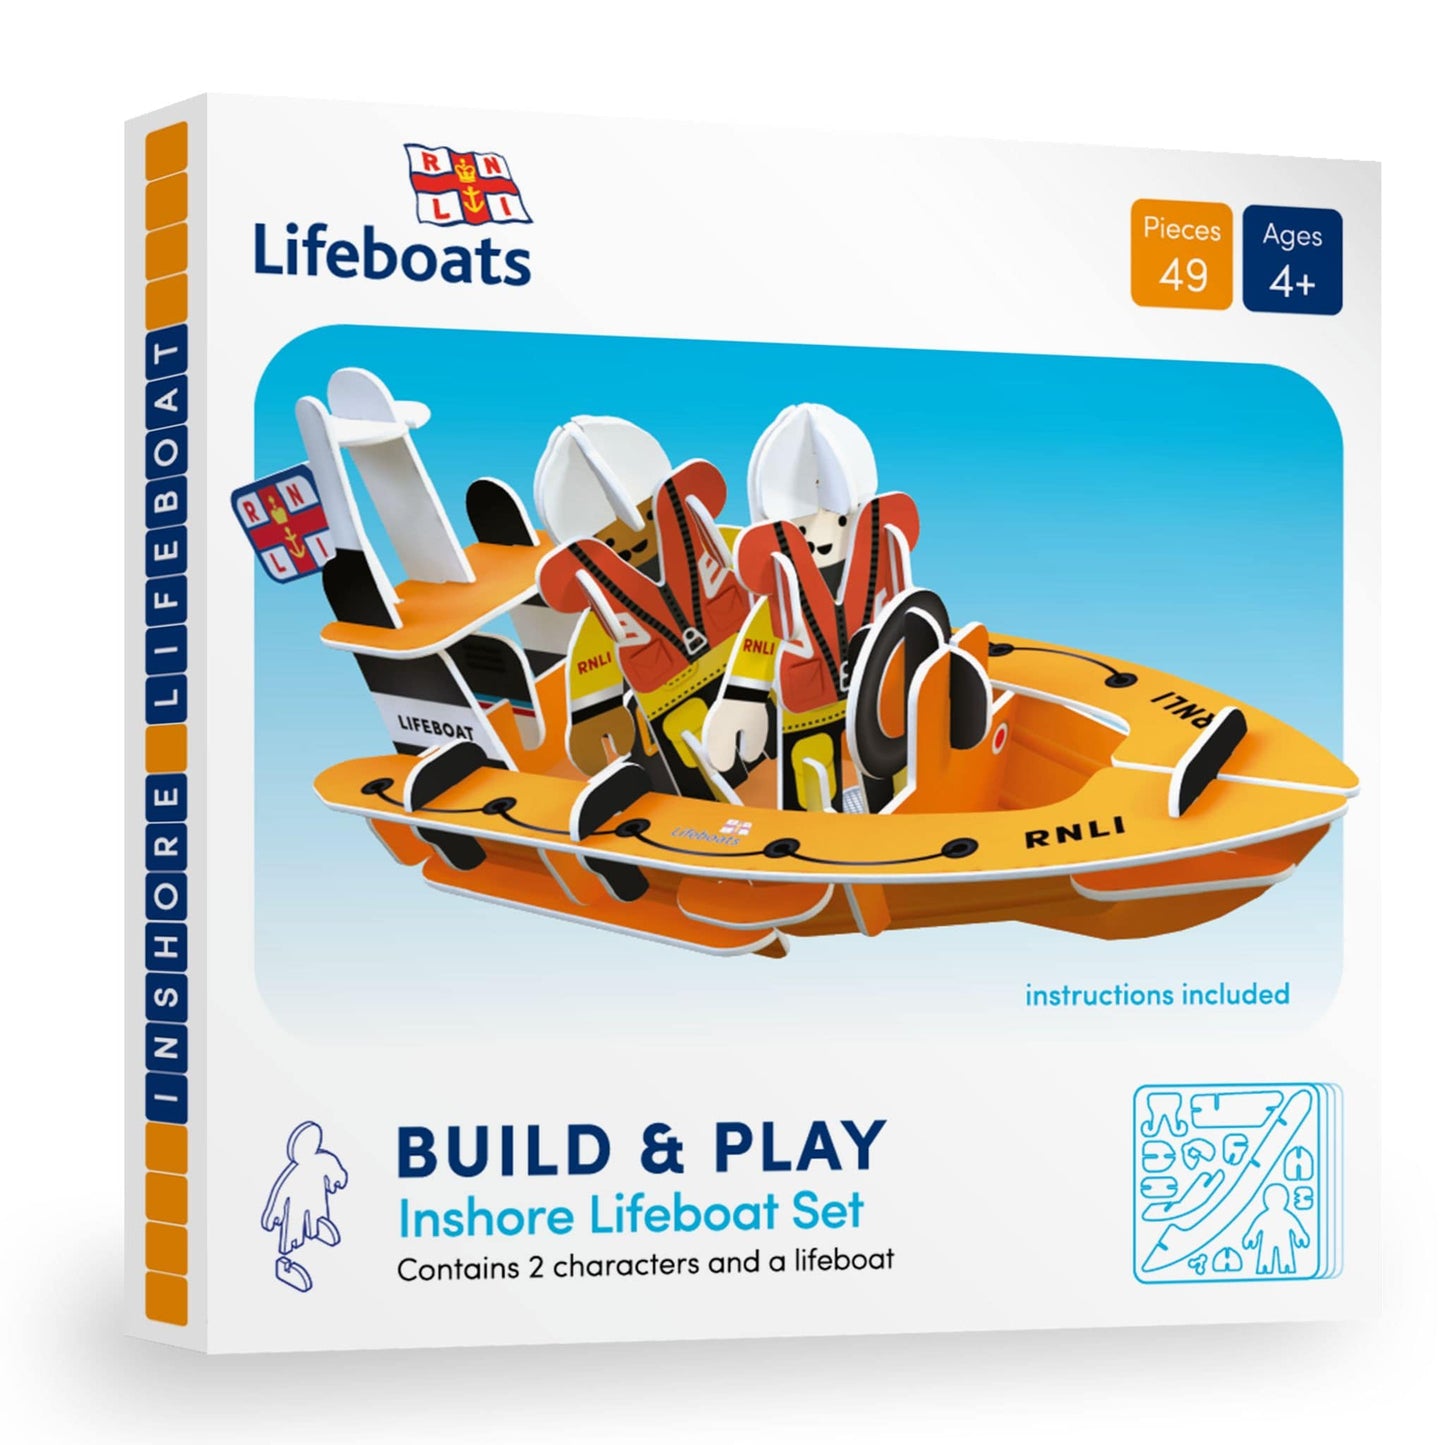 Playpress RNLI Lifeboat - eco-friendly toy